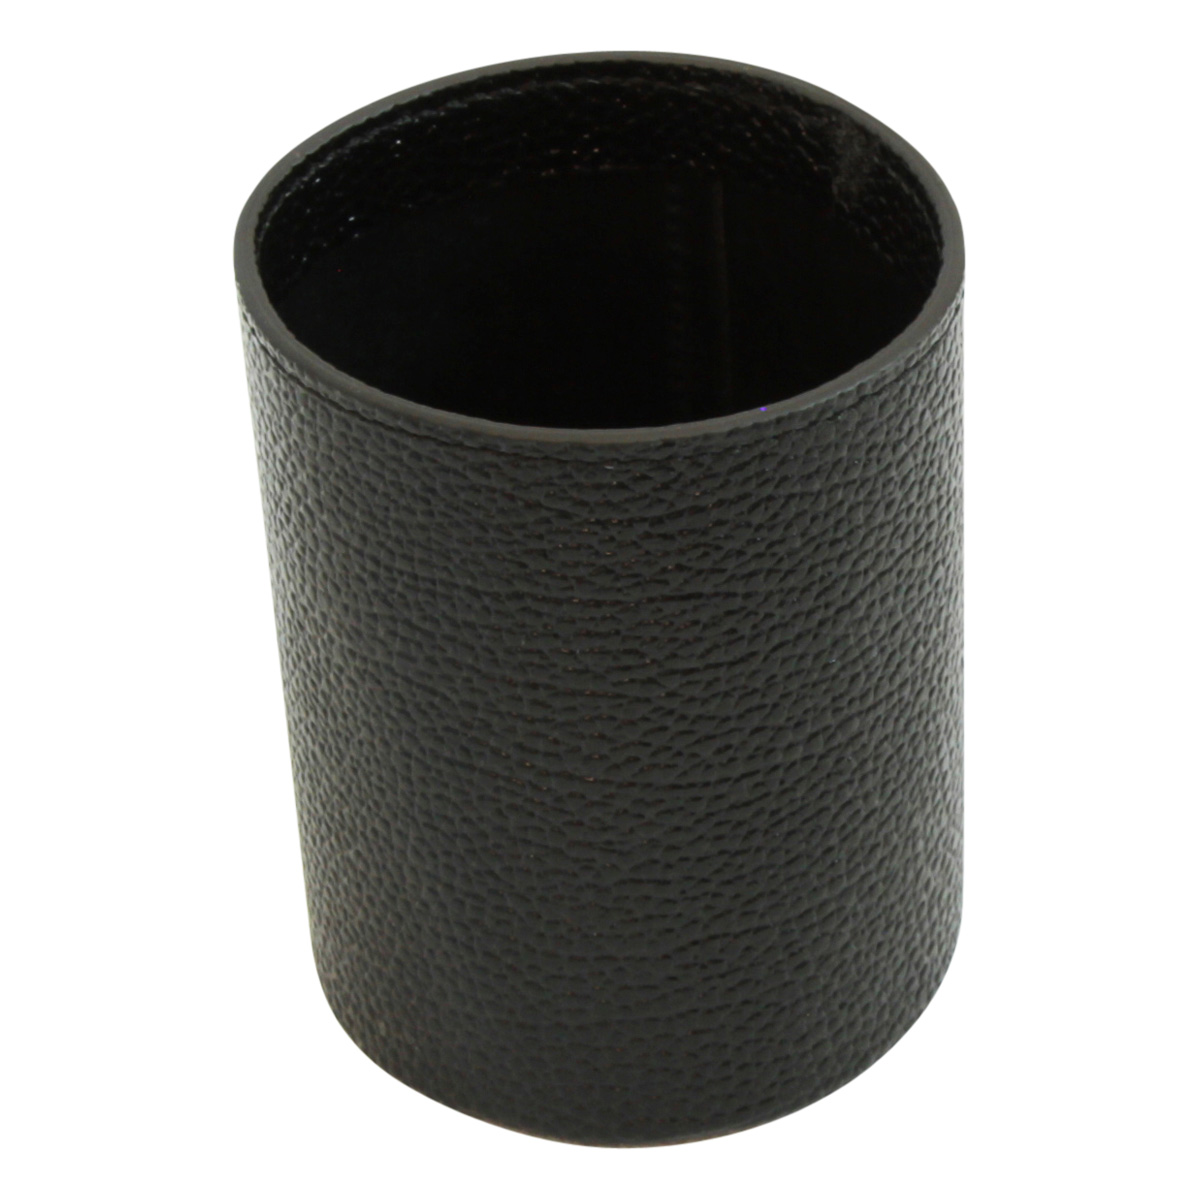 Leather pen cup - black | 763051NE US | Old Angler Firenze